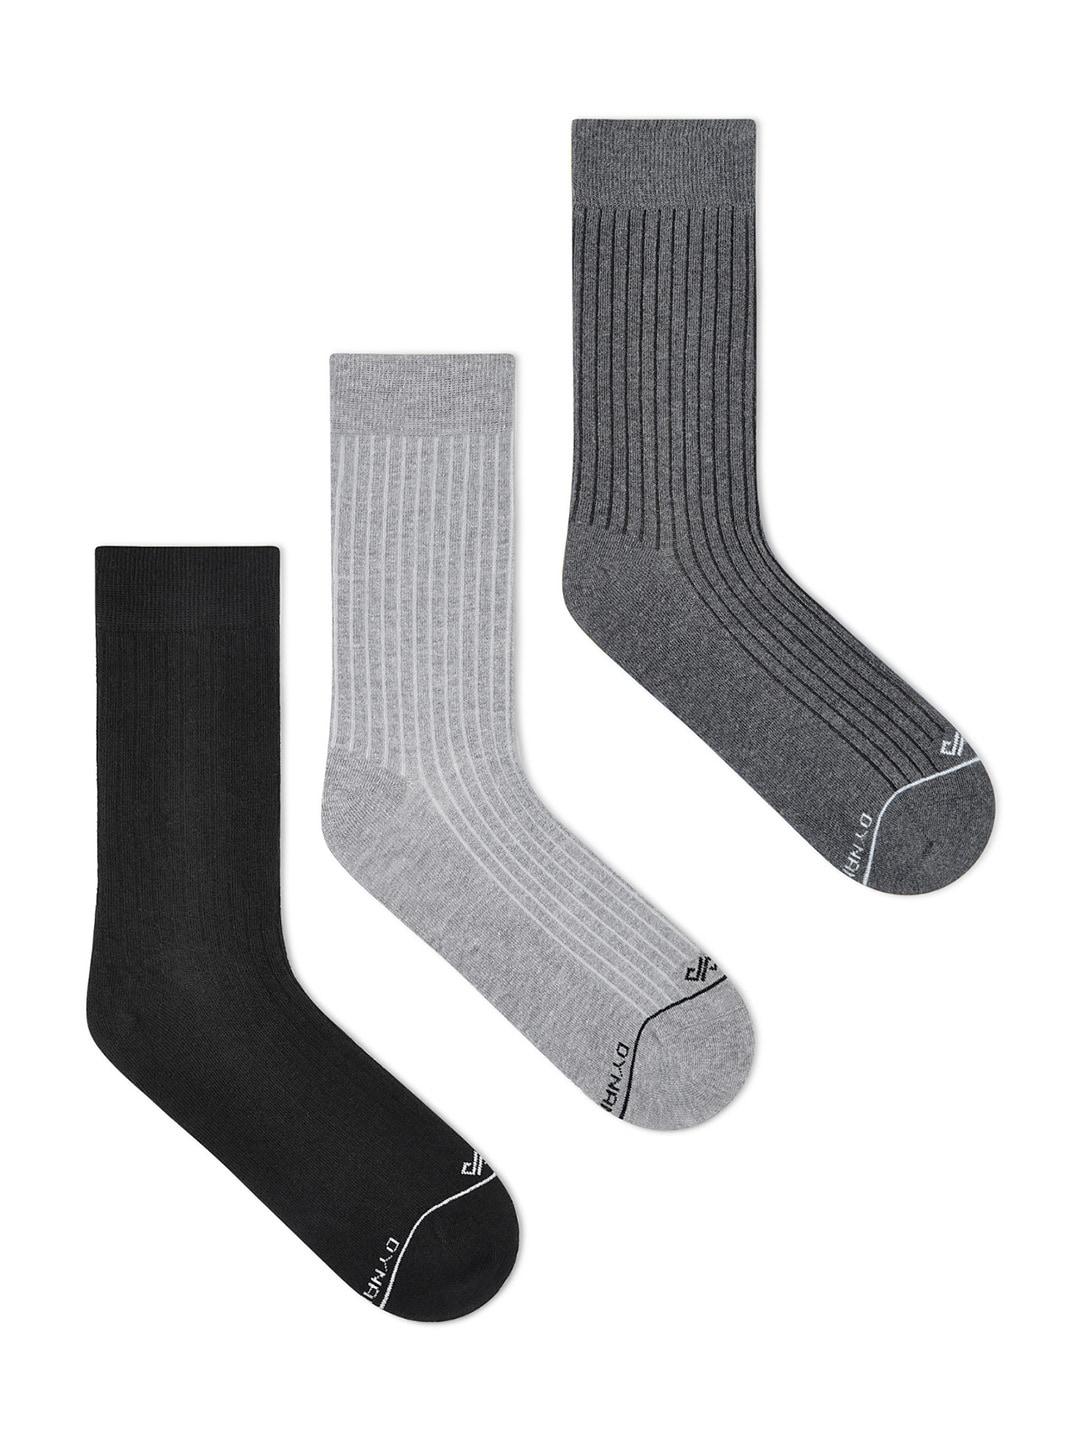 dynamocks-unisex-pack-of-3-solid-calf-length-socks